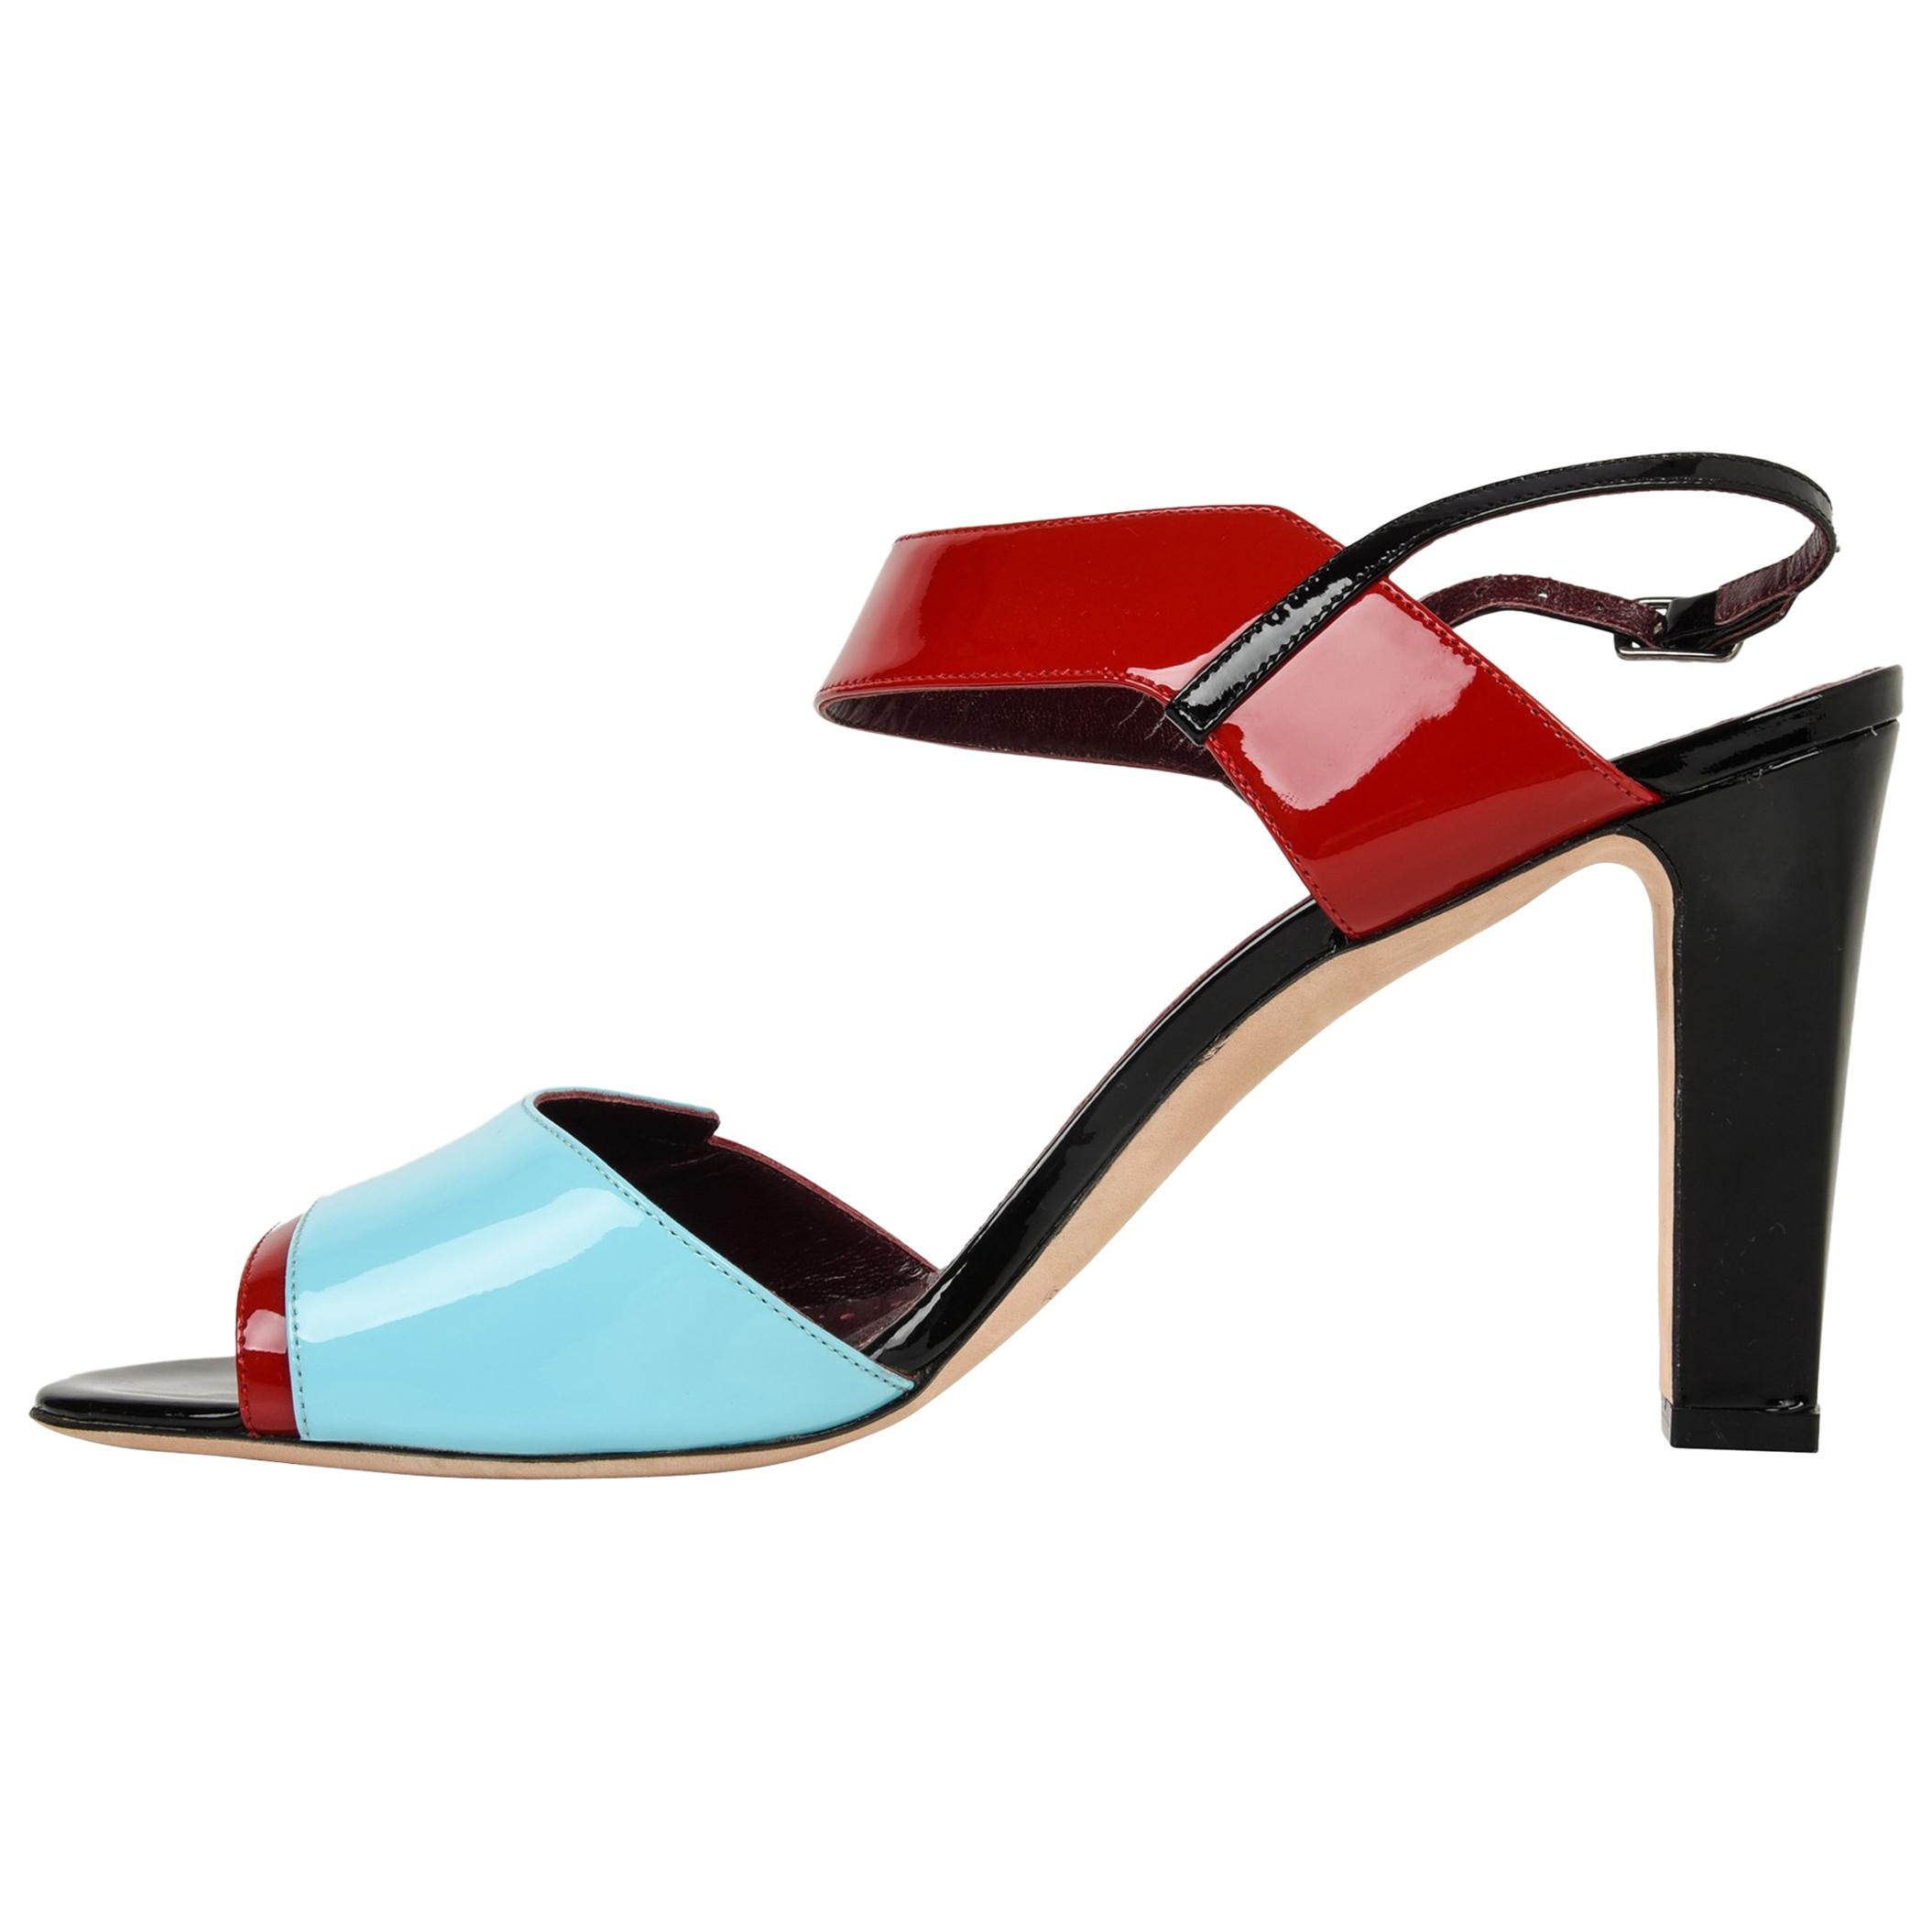 Manolo Blahnik Shoe Multi Coloured Patent Leather Red Blue Black Sandal 40 / 10